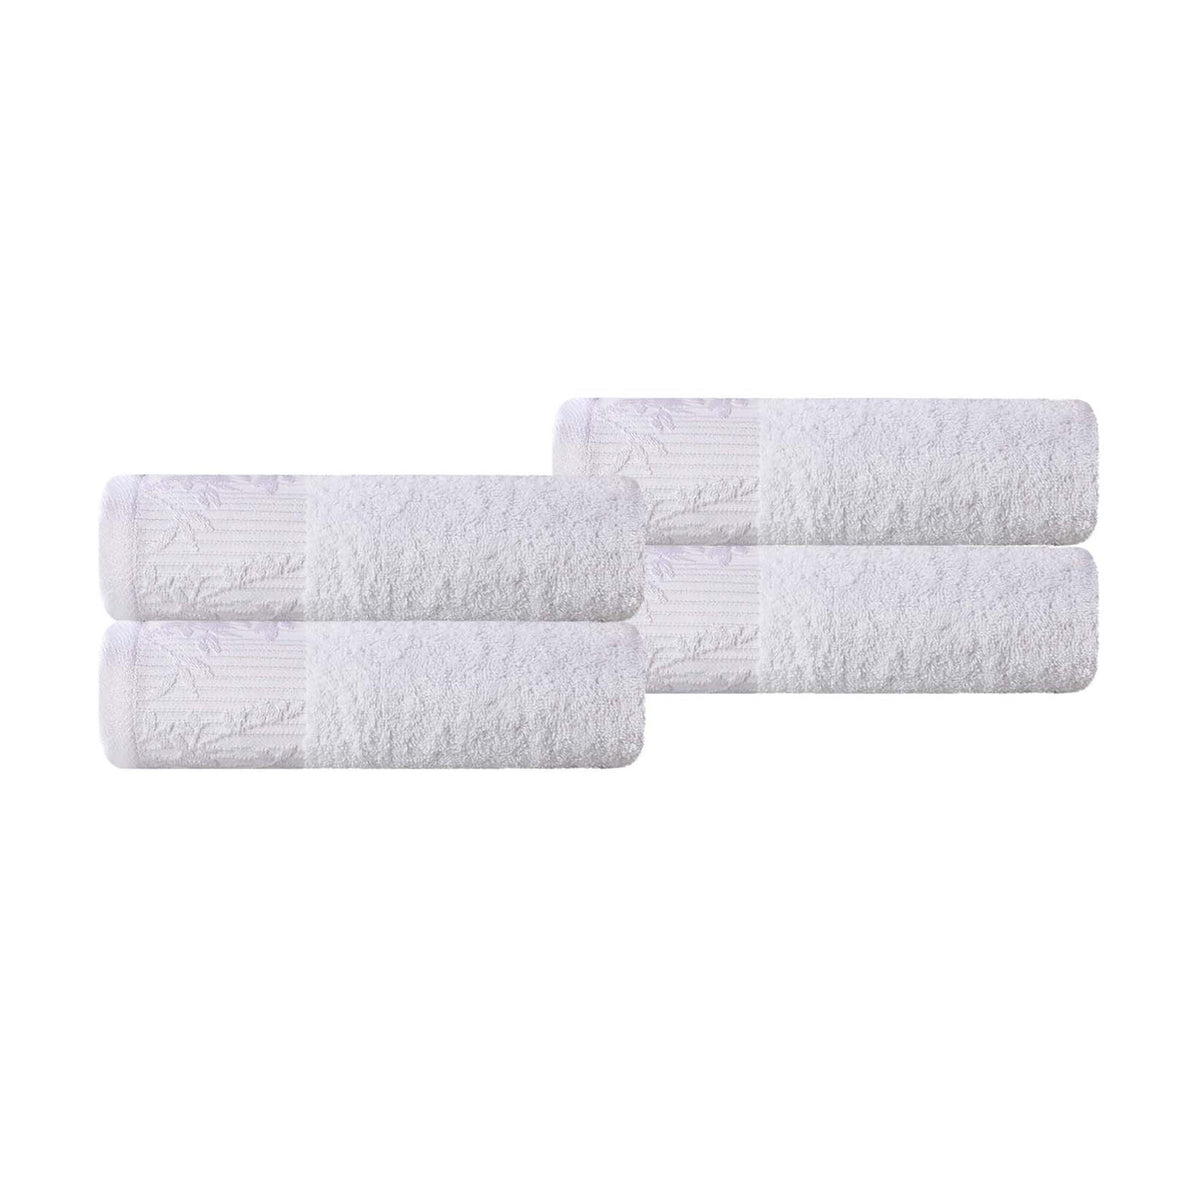 Superior Wisteria Cotton Floral Jacquard Border Hand Towels - White-White